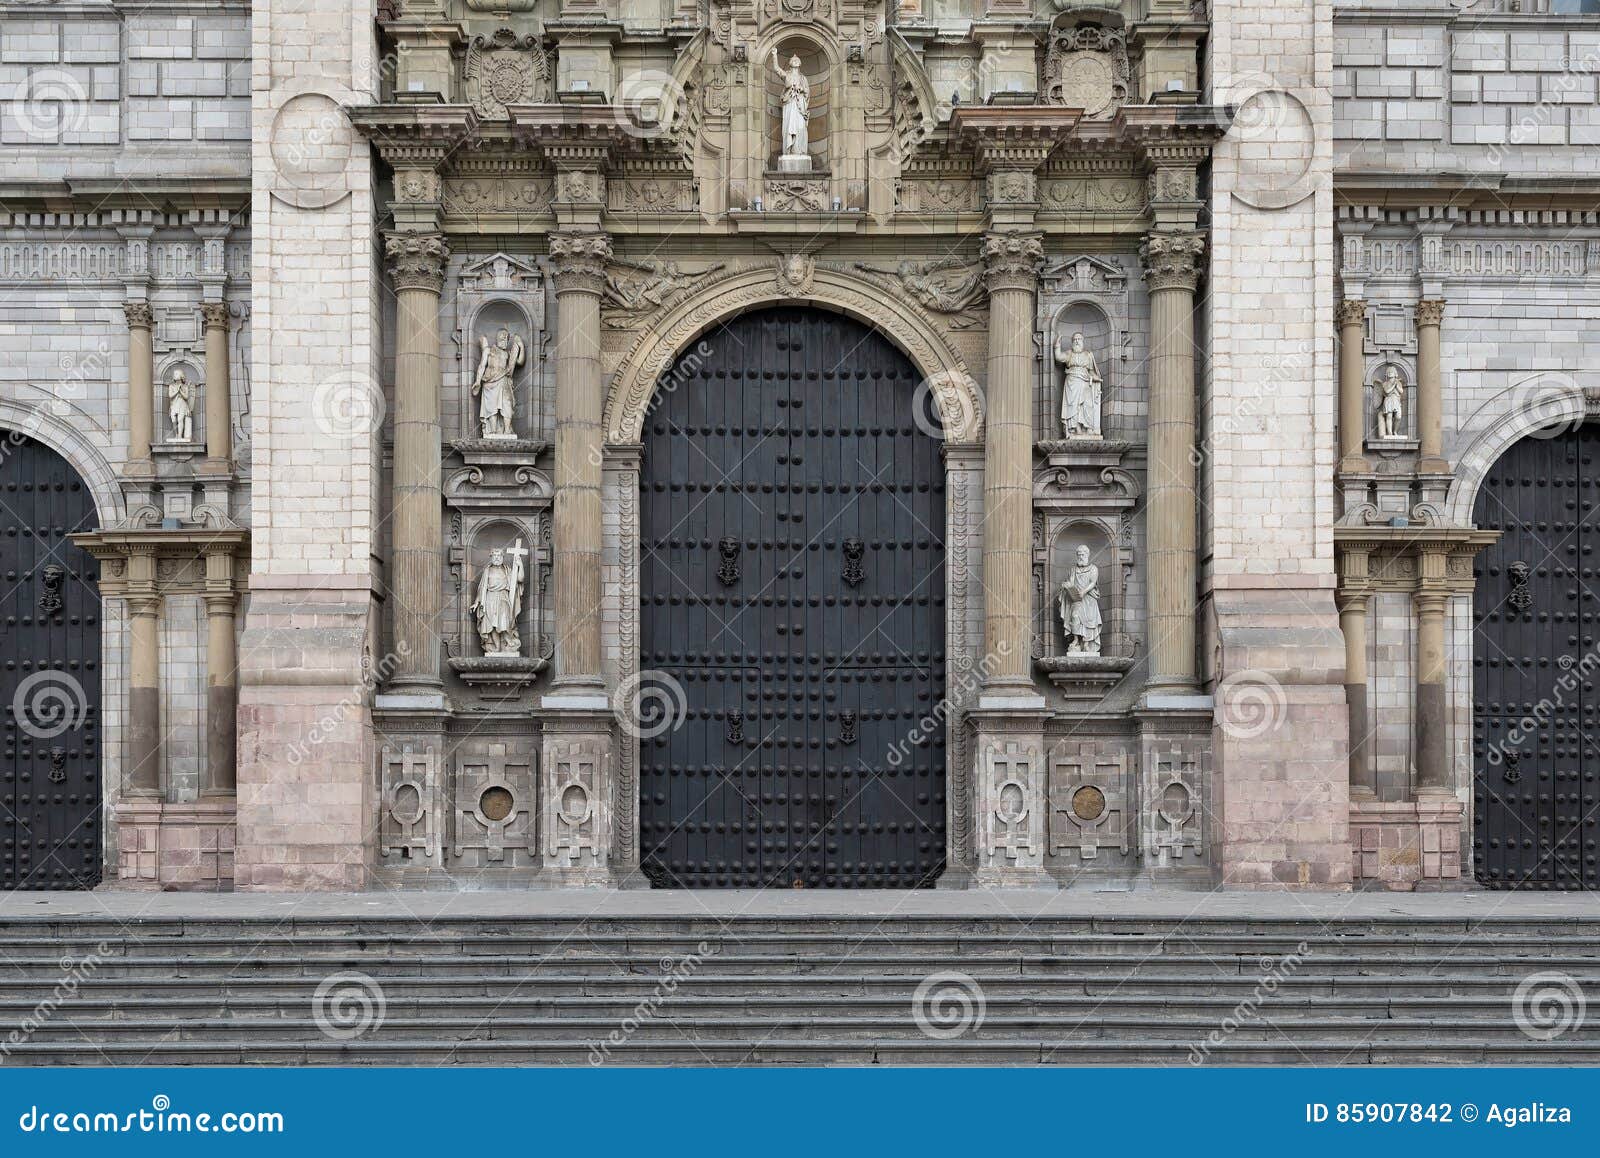 facade of lima cathedral at plaza de armas